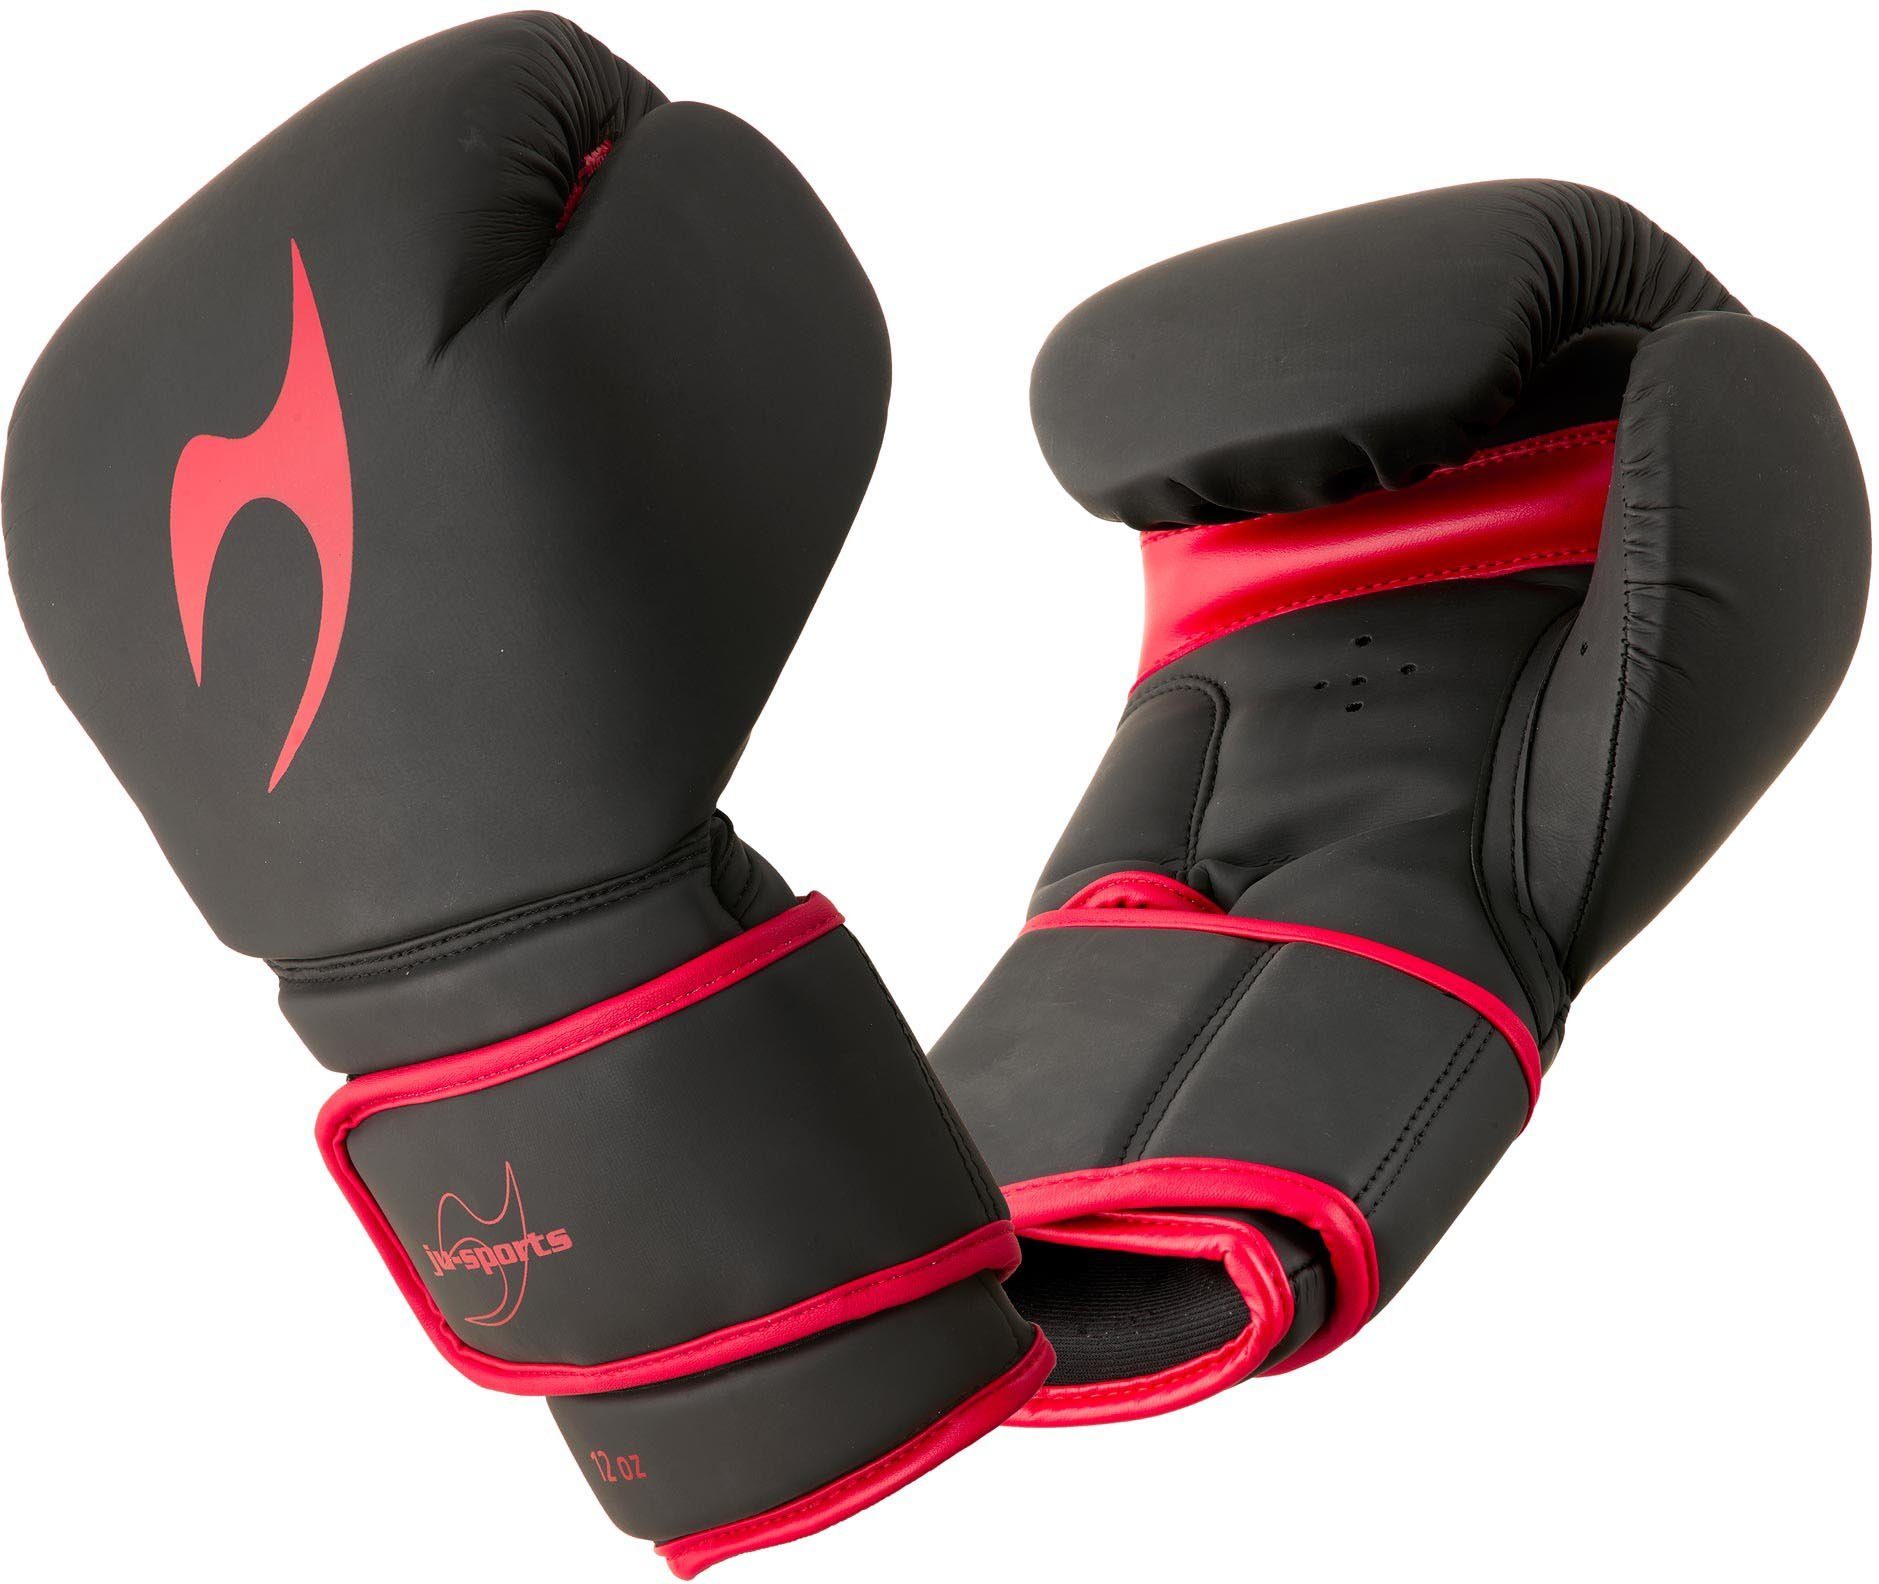 Ju-Sports Boxhandschuhe black/red pro Training